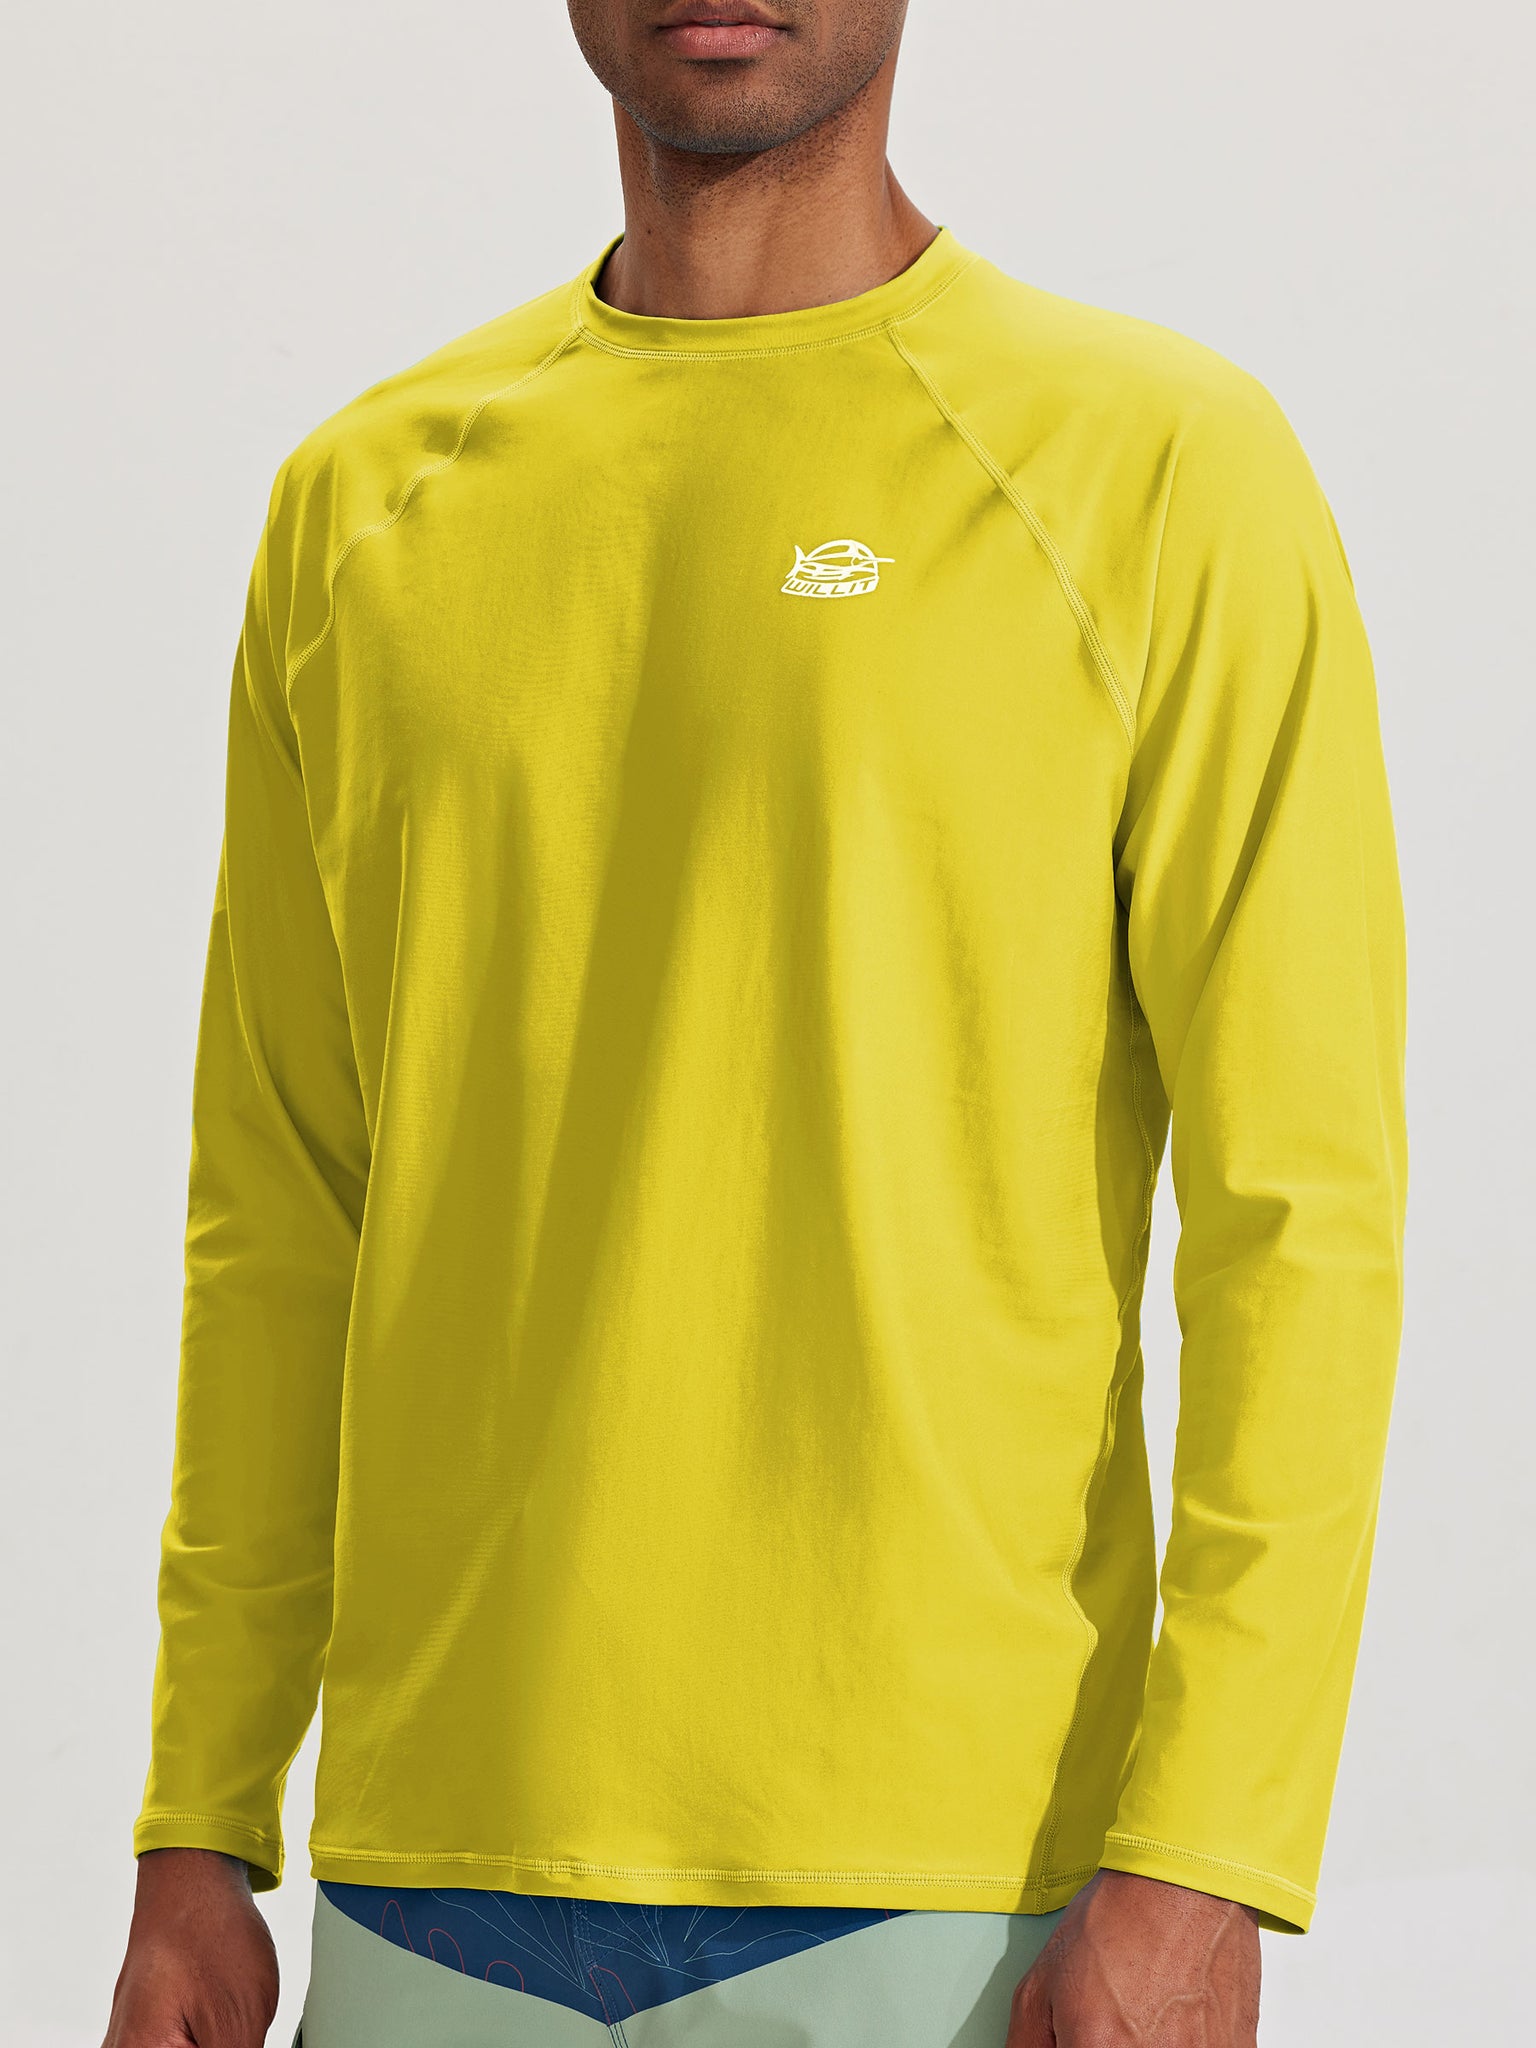 Men's Sun Protection Long Sleeve Shirt_Yellow_model1